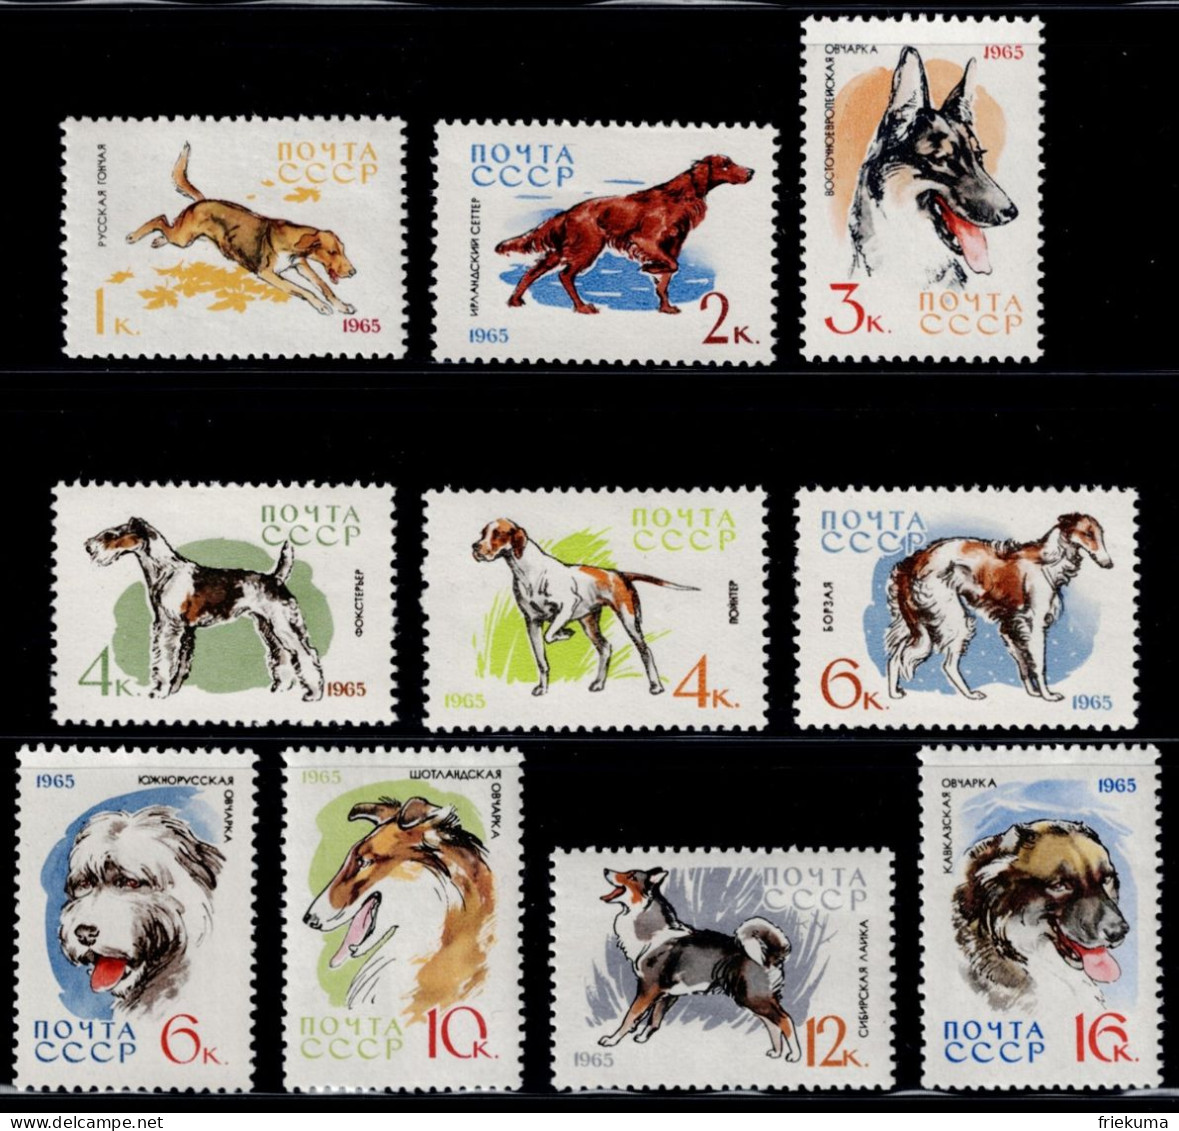 CCCP 1965, Service And Hunting Dogs: Russian Hound, Irish Setter, Eastern European Shepherd Dog, Etc., MiNr. 3020-3029 - Hunde